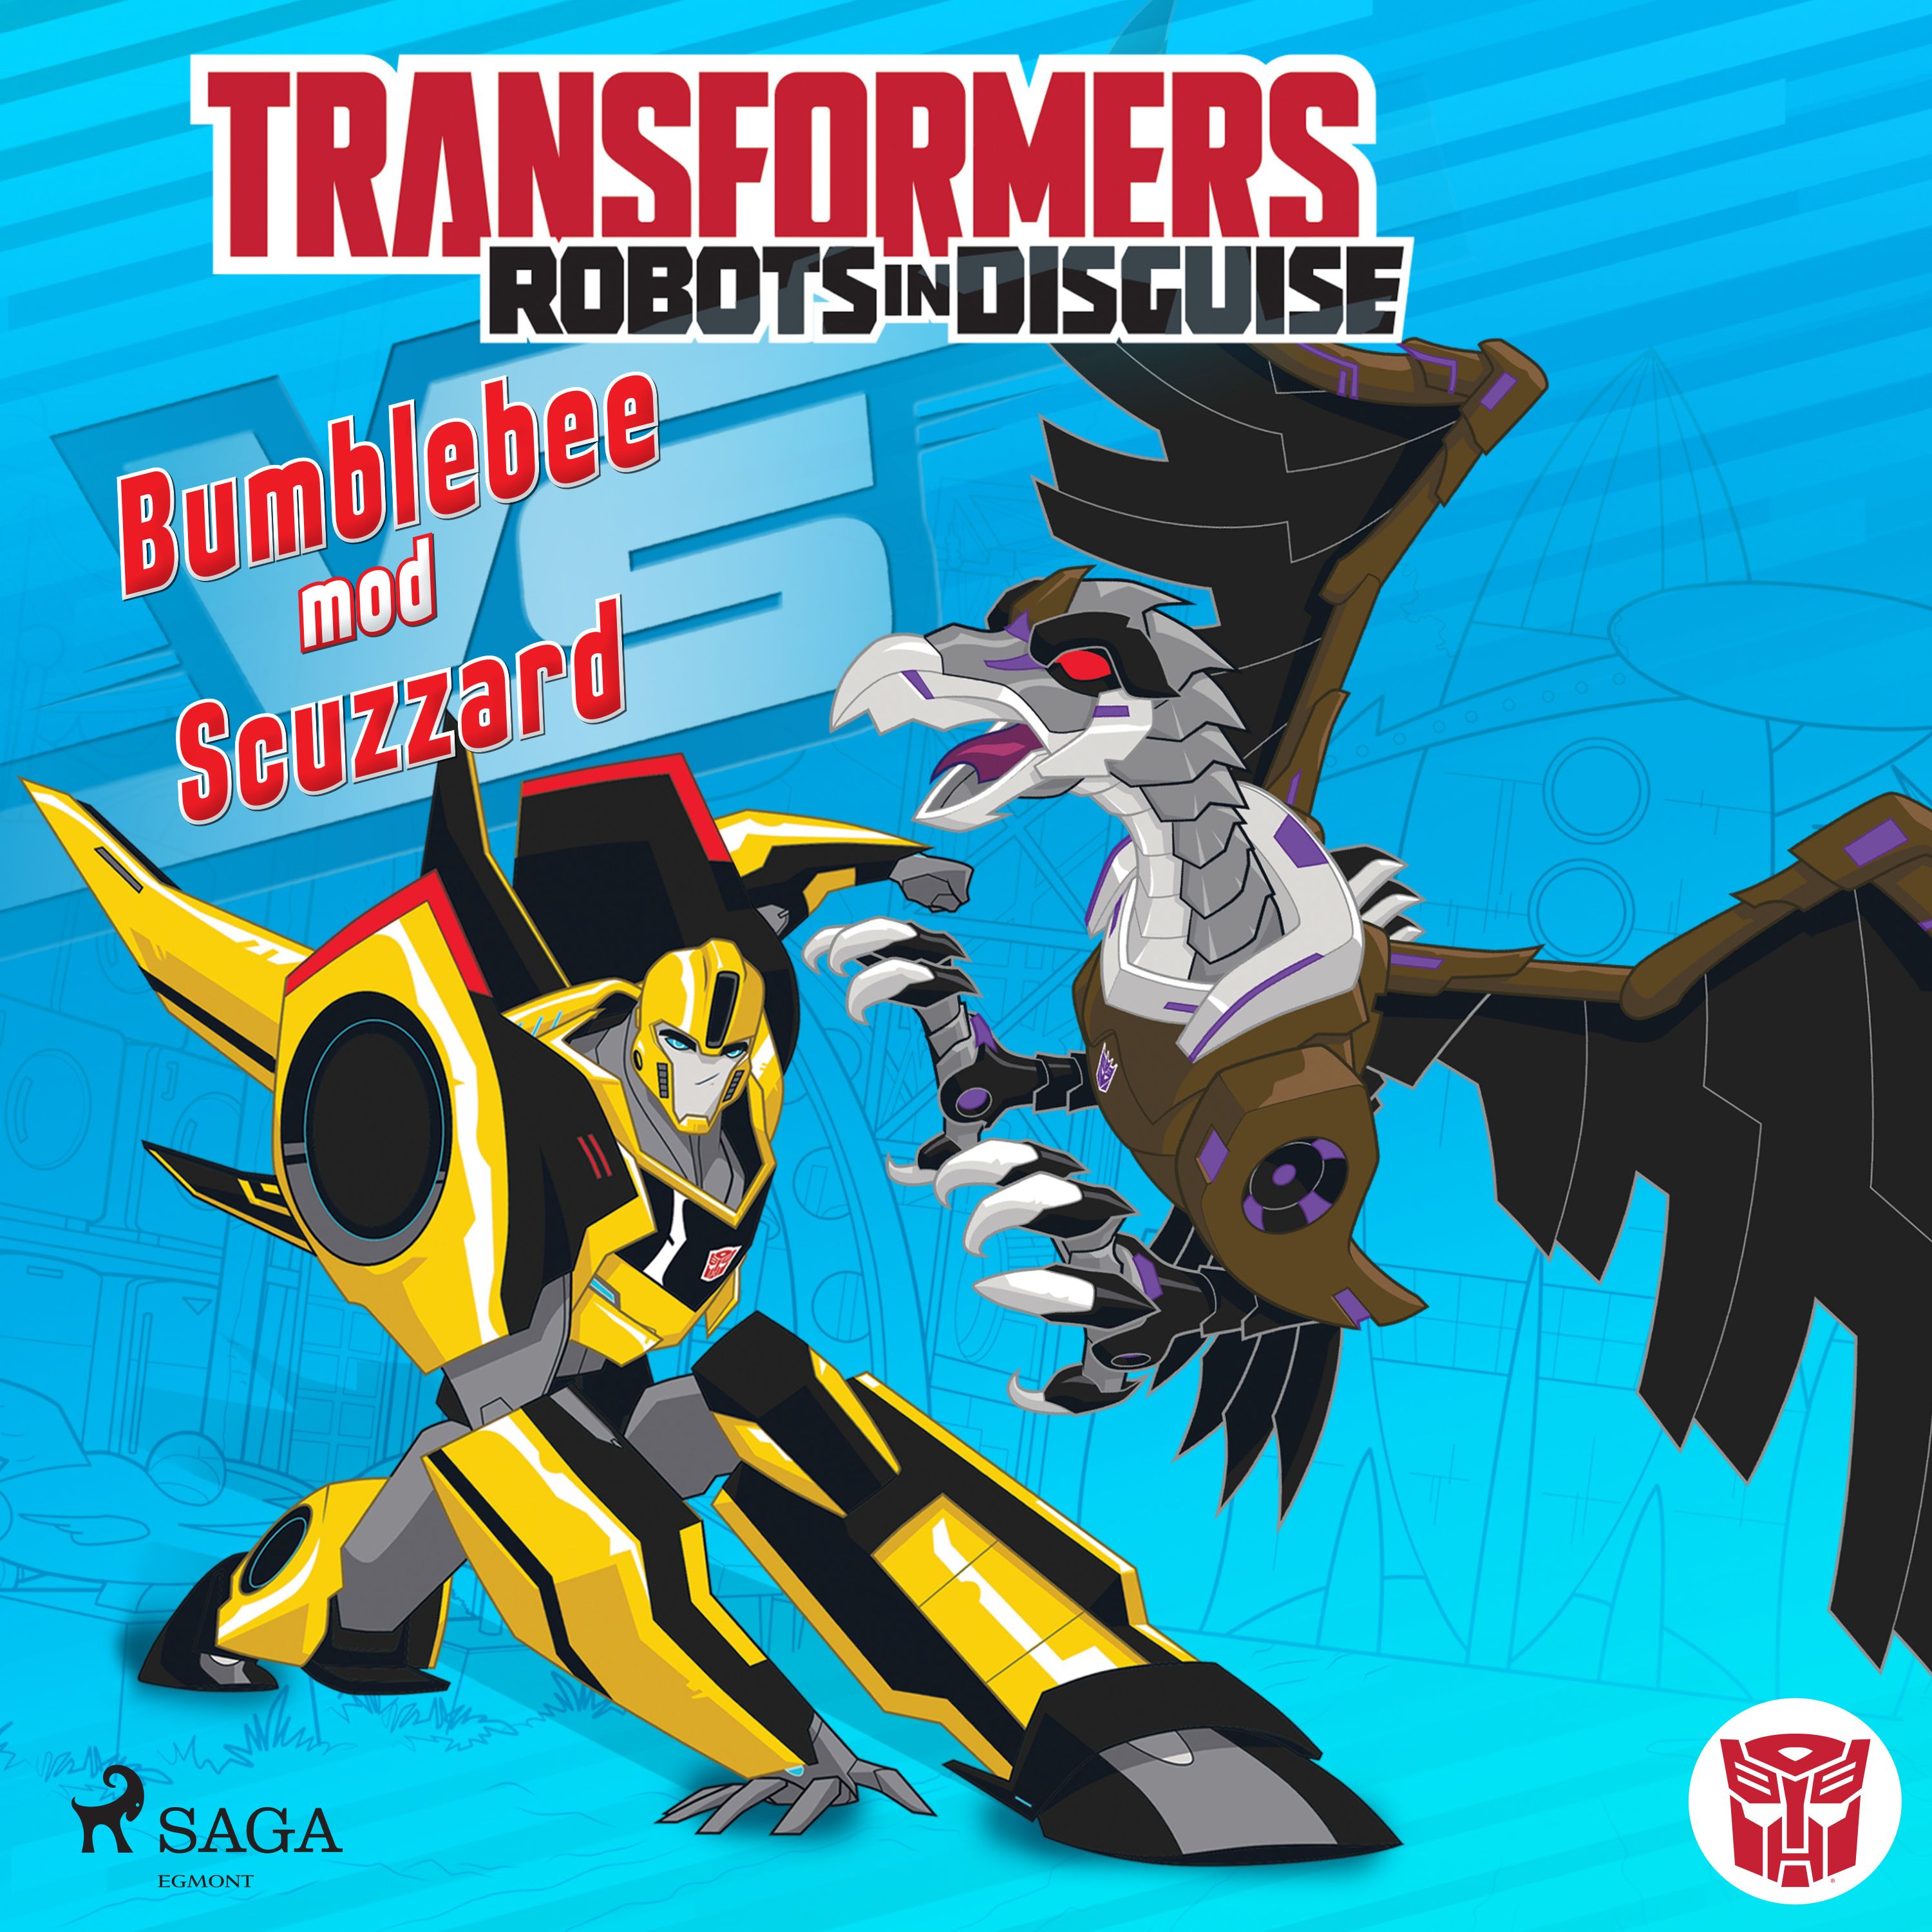 Transformers - Robots in Disguise - Bumblebee mod Scuzzard, lydbog af John Sazaklis